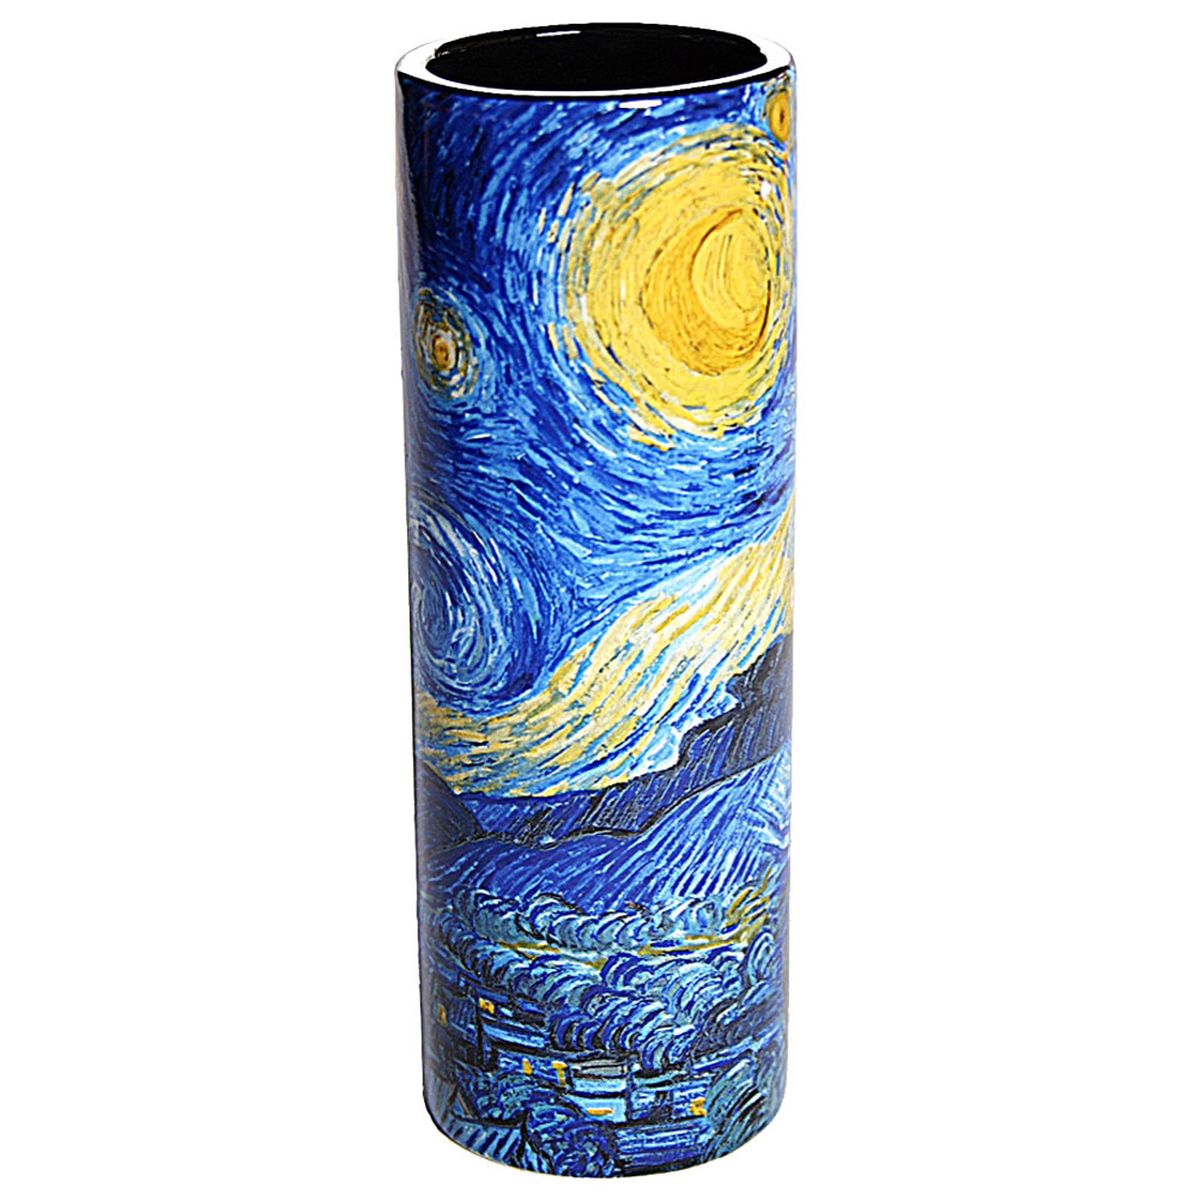 Ceramic vase VAN GOGH - The Starry Night